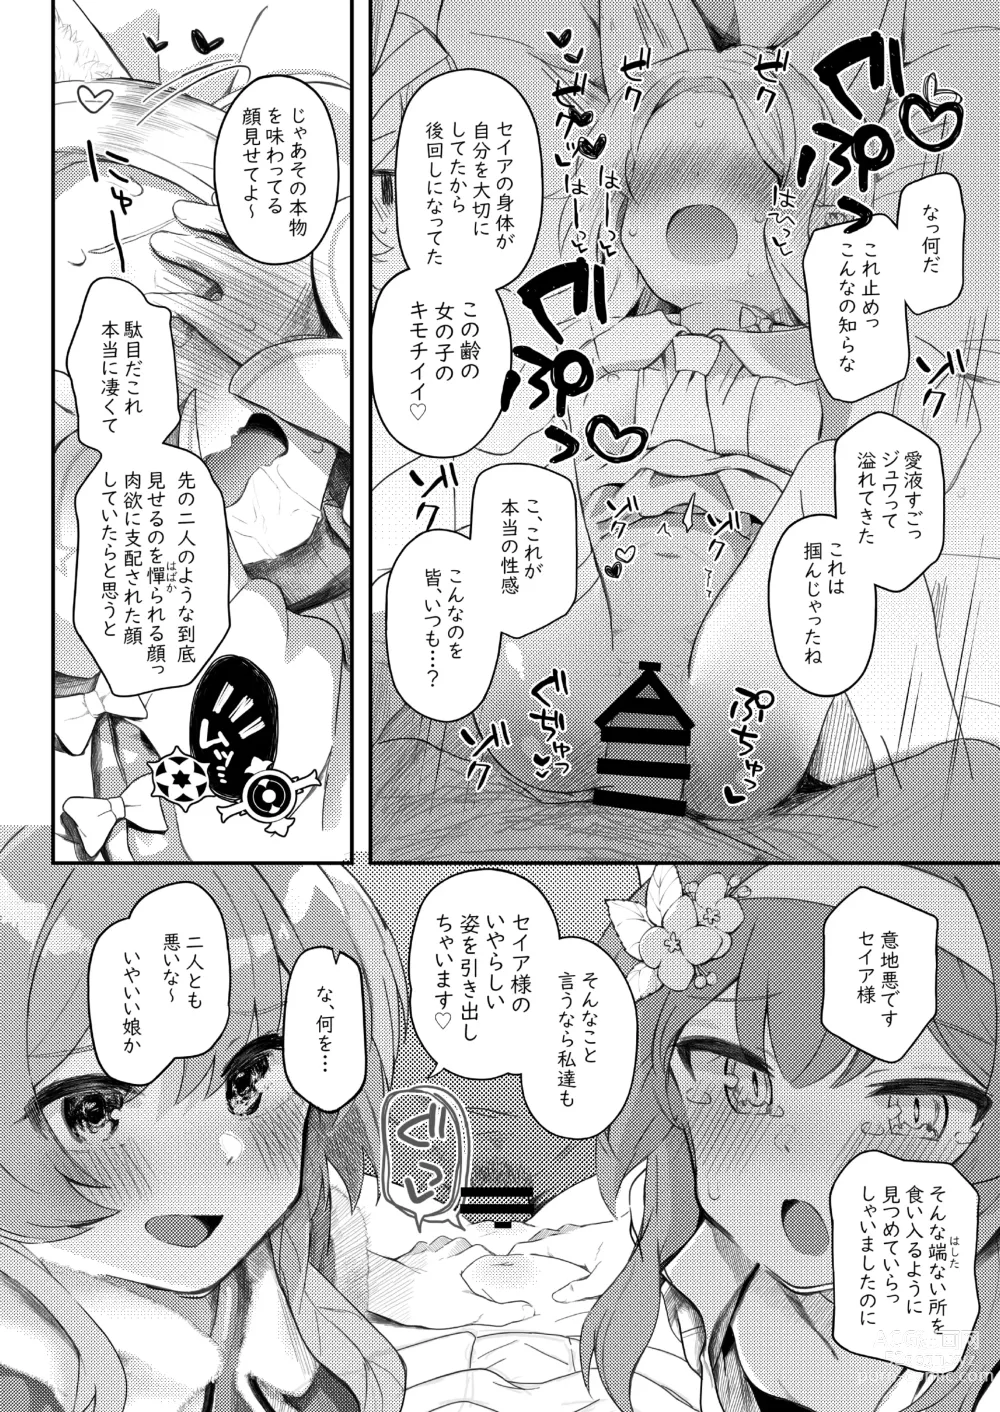 Page 61 of doujinshi Trinity no Seijyotachi